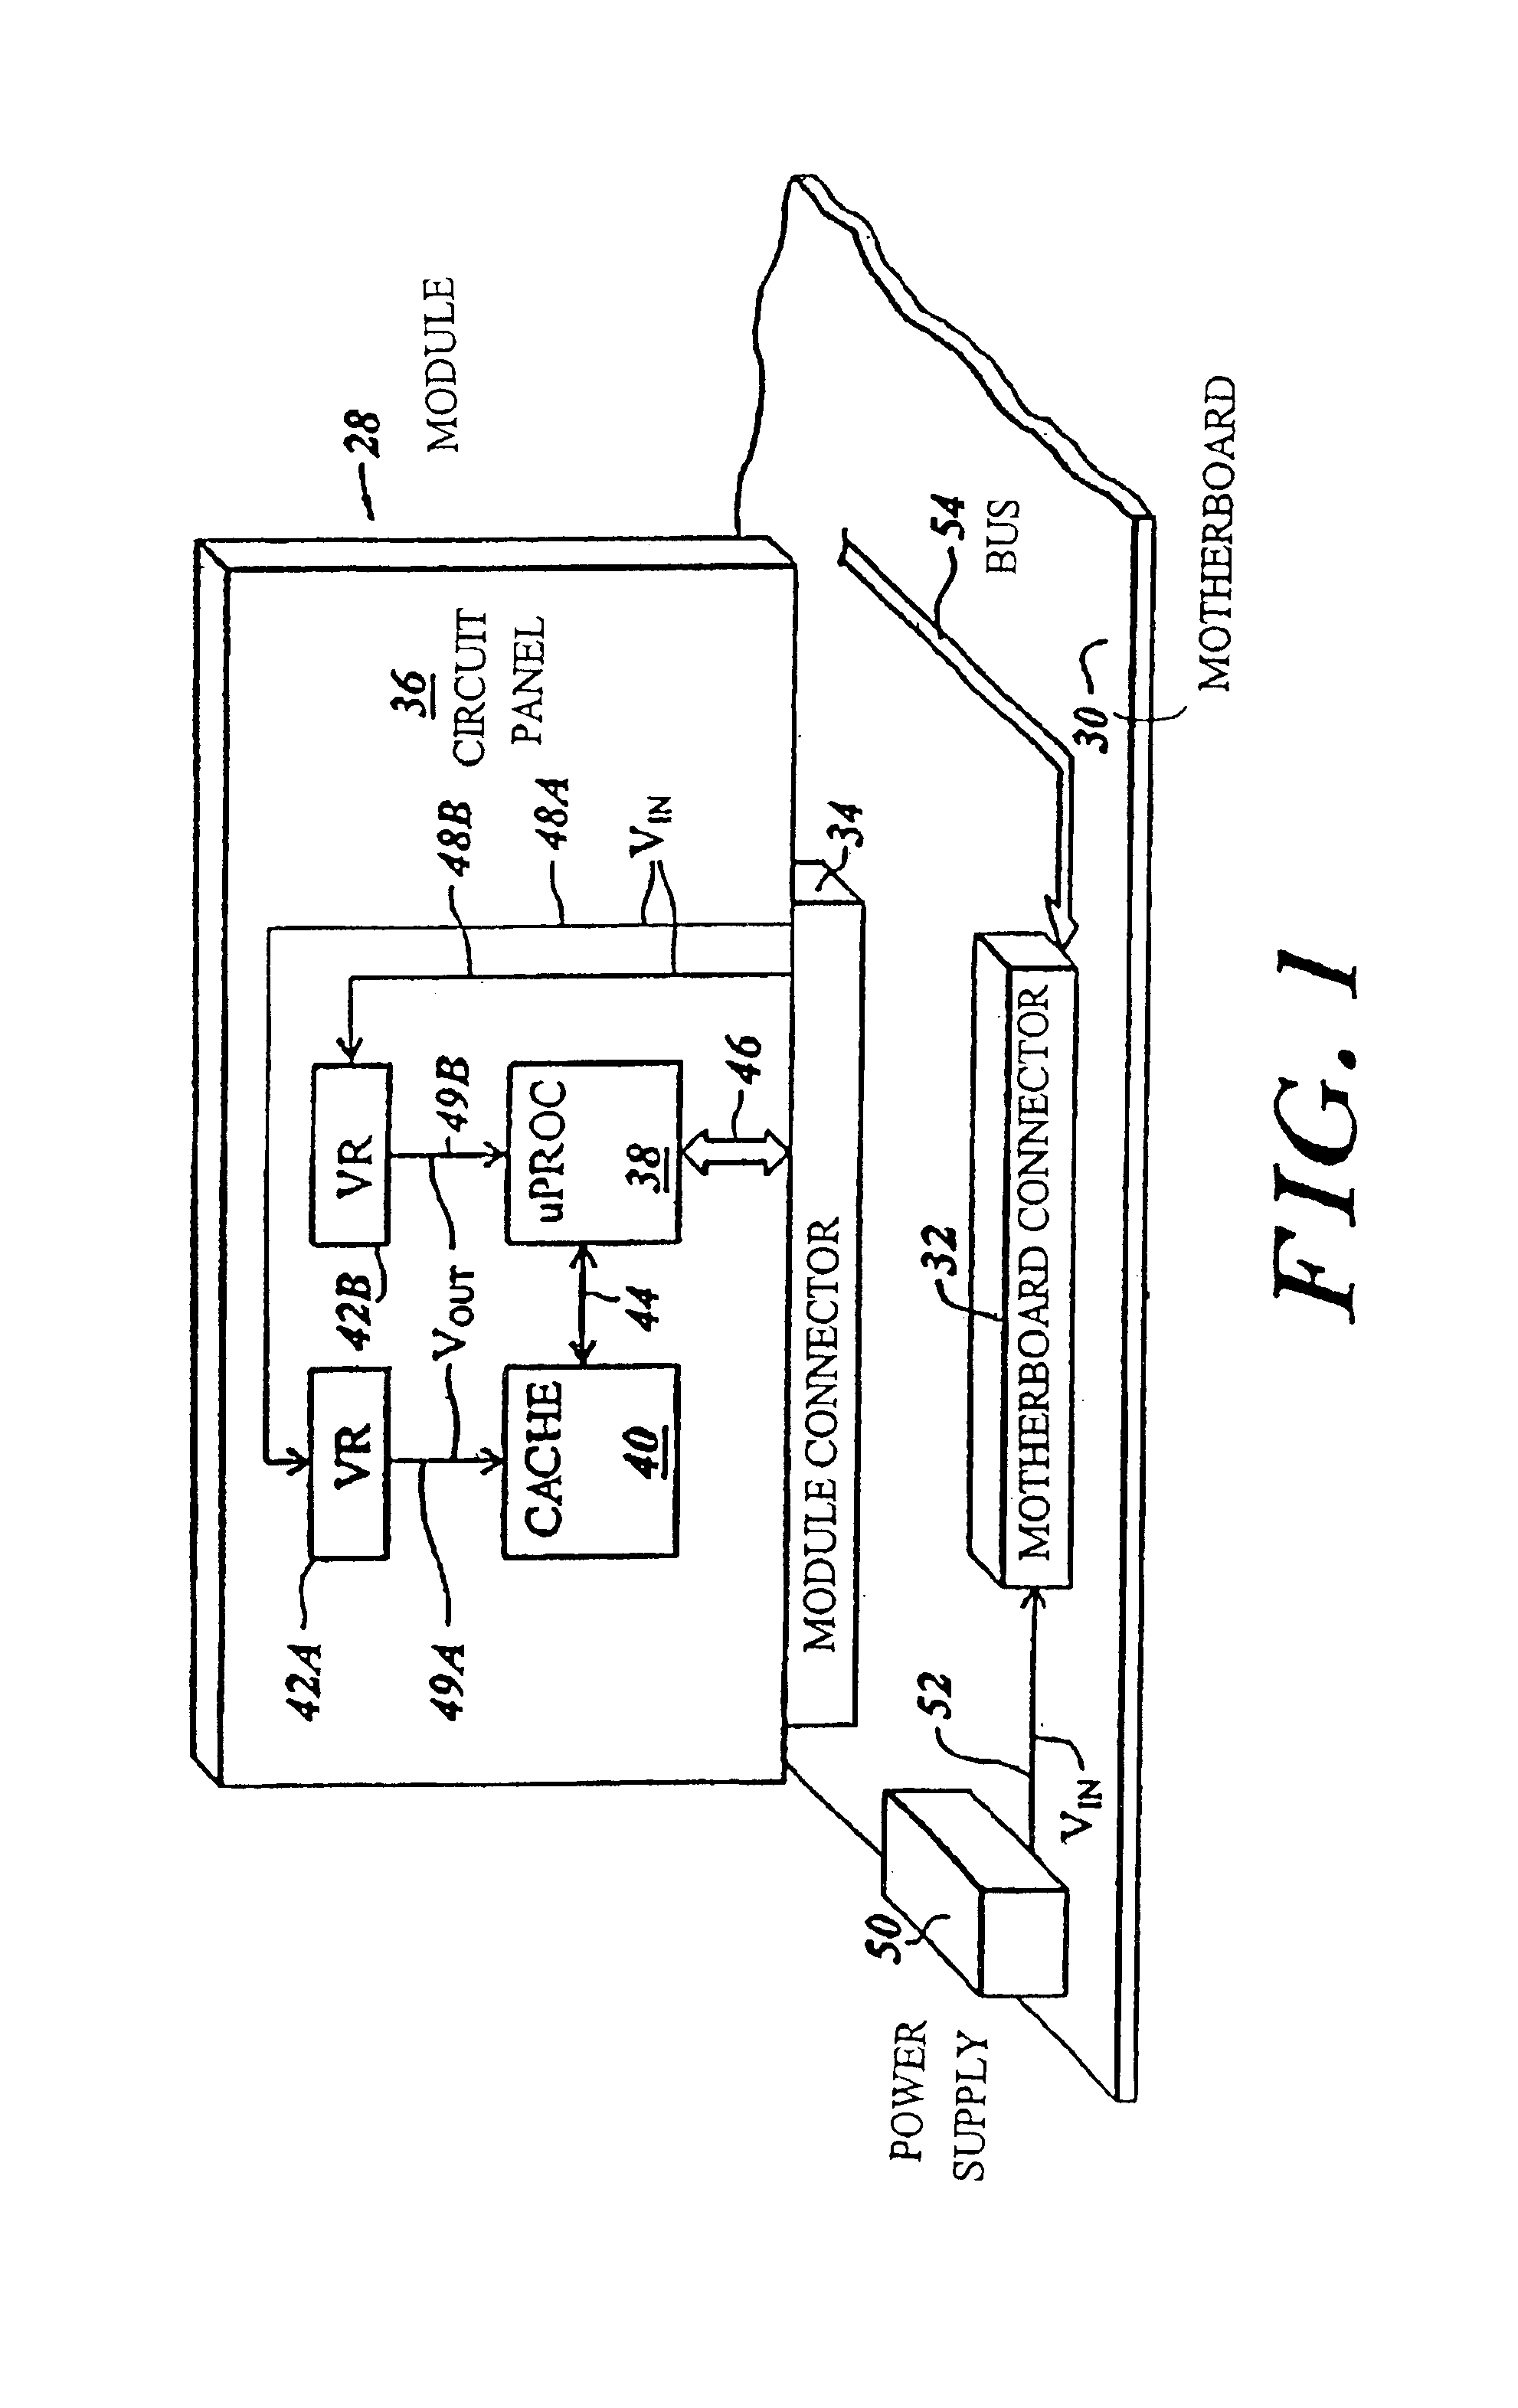 Microprocessor module with integrated voltage regulators